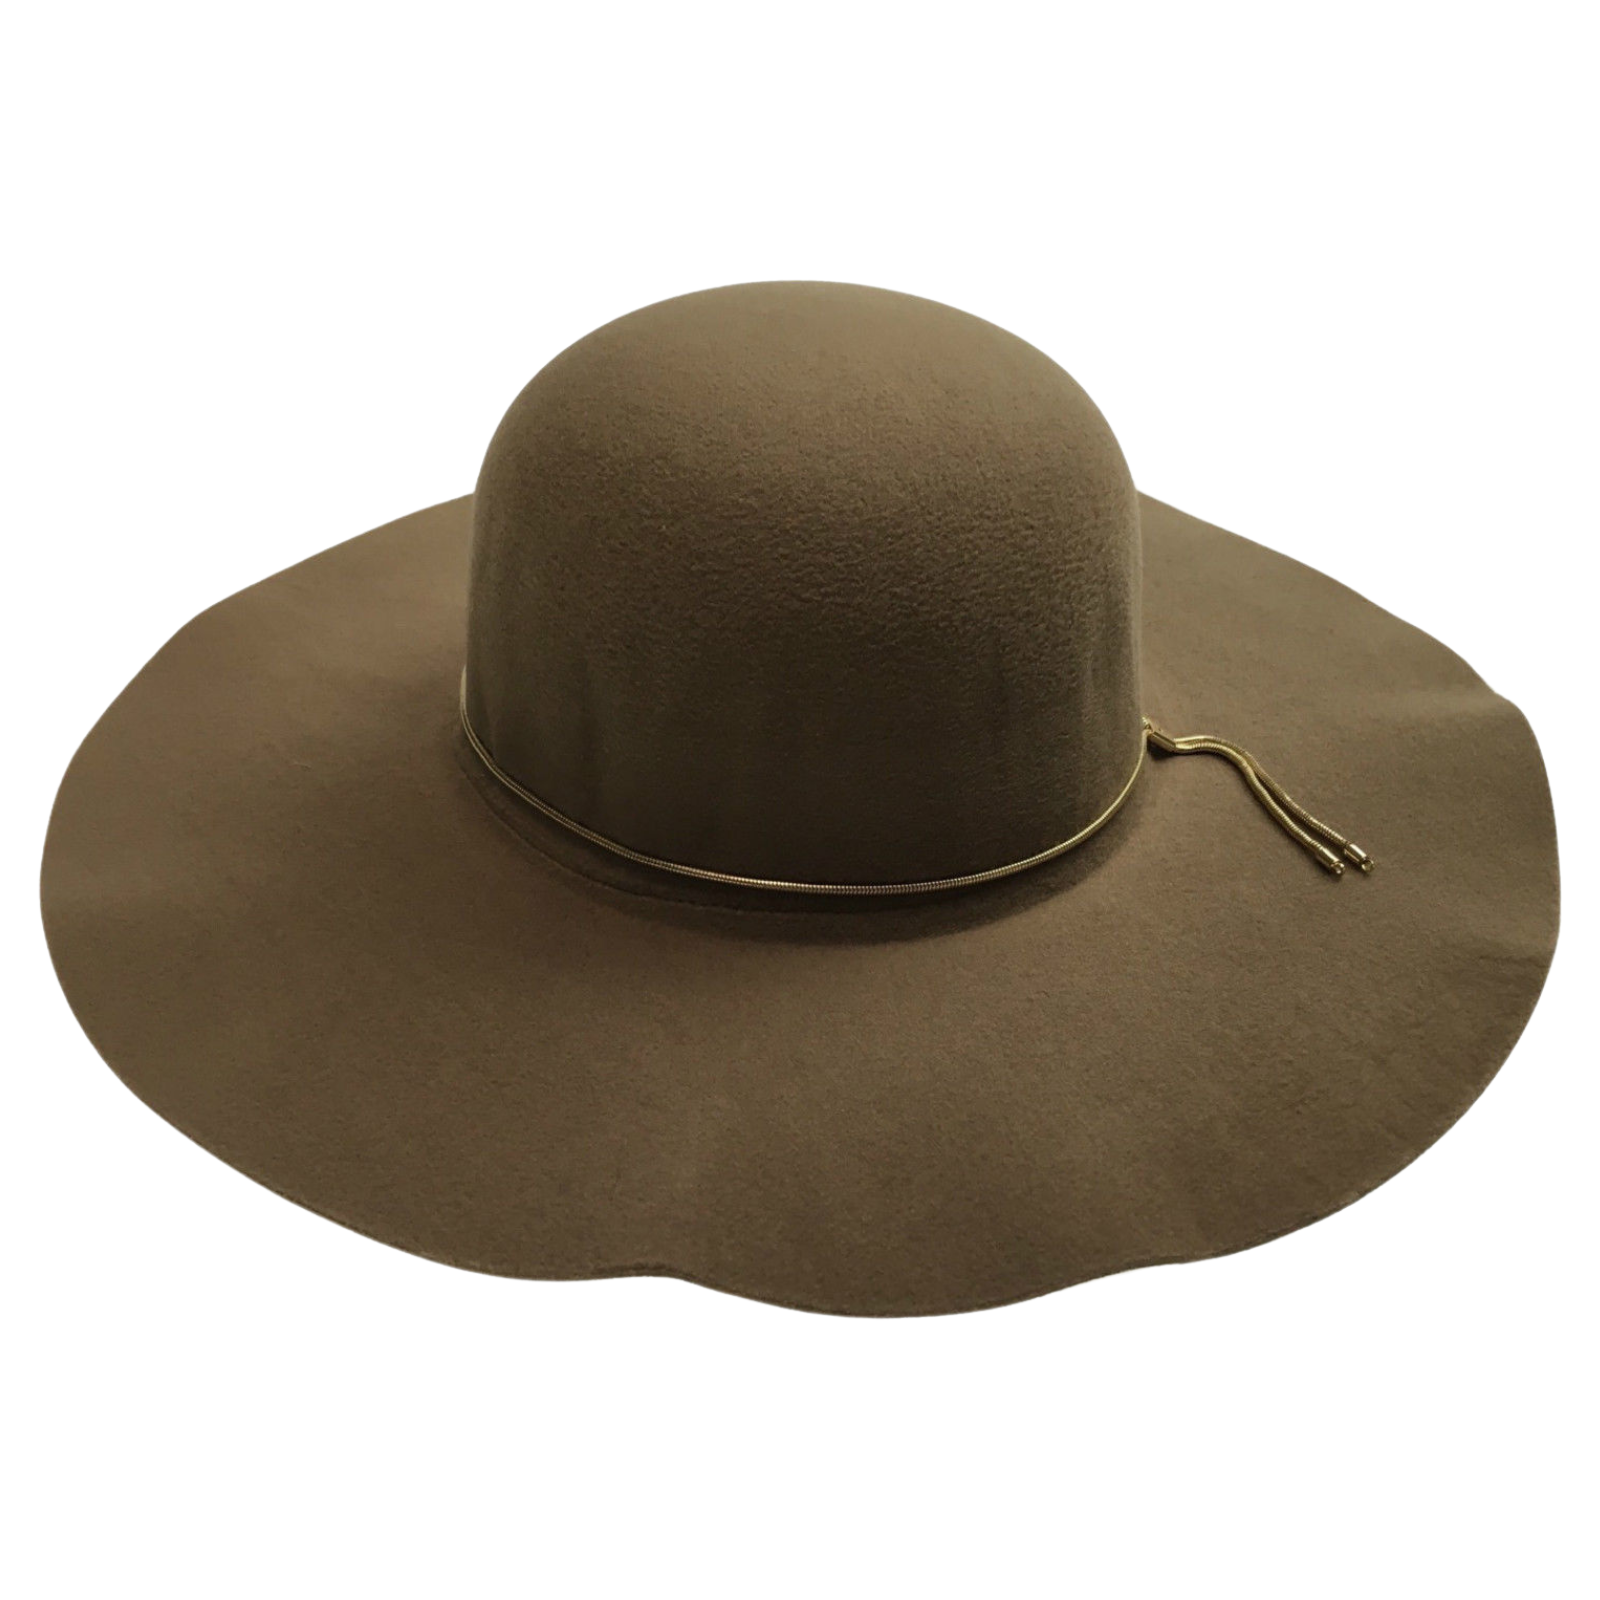 Wide Brim Felt Hat Floppy Vintage Fedora Bowler Cloche Ladies Fashion Cap